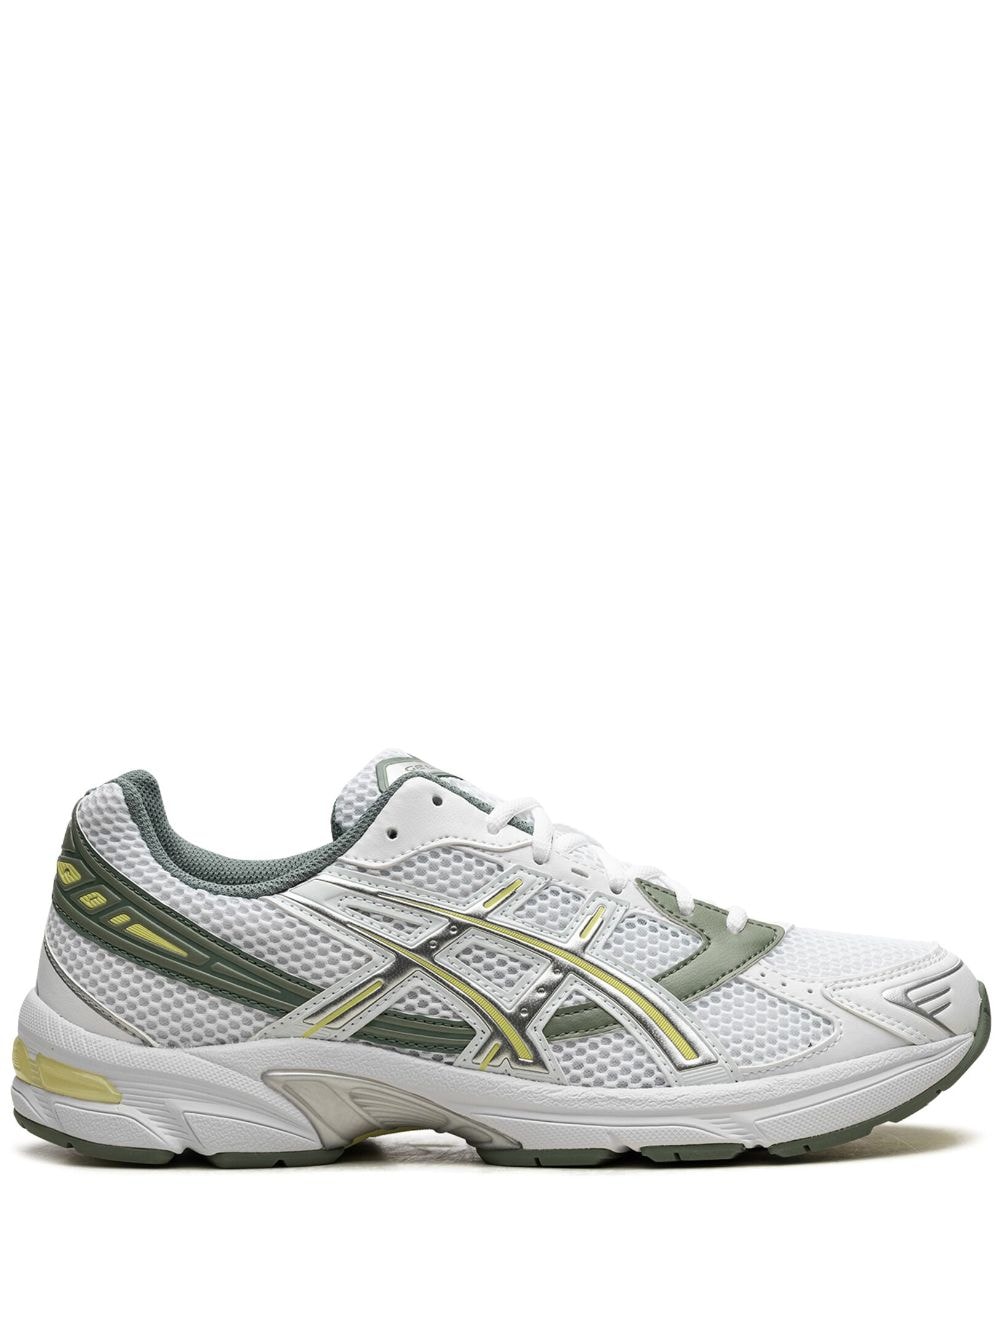 ASICS GEL-1130™ "White/Jade/Yellow" sneakers von ASICS